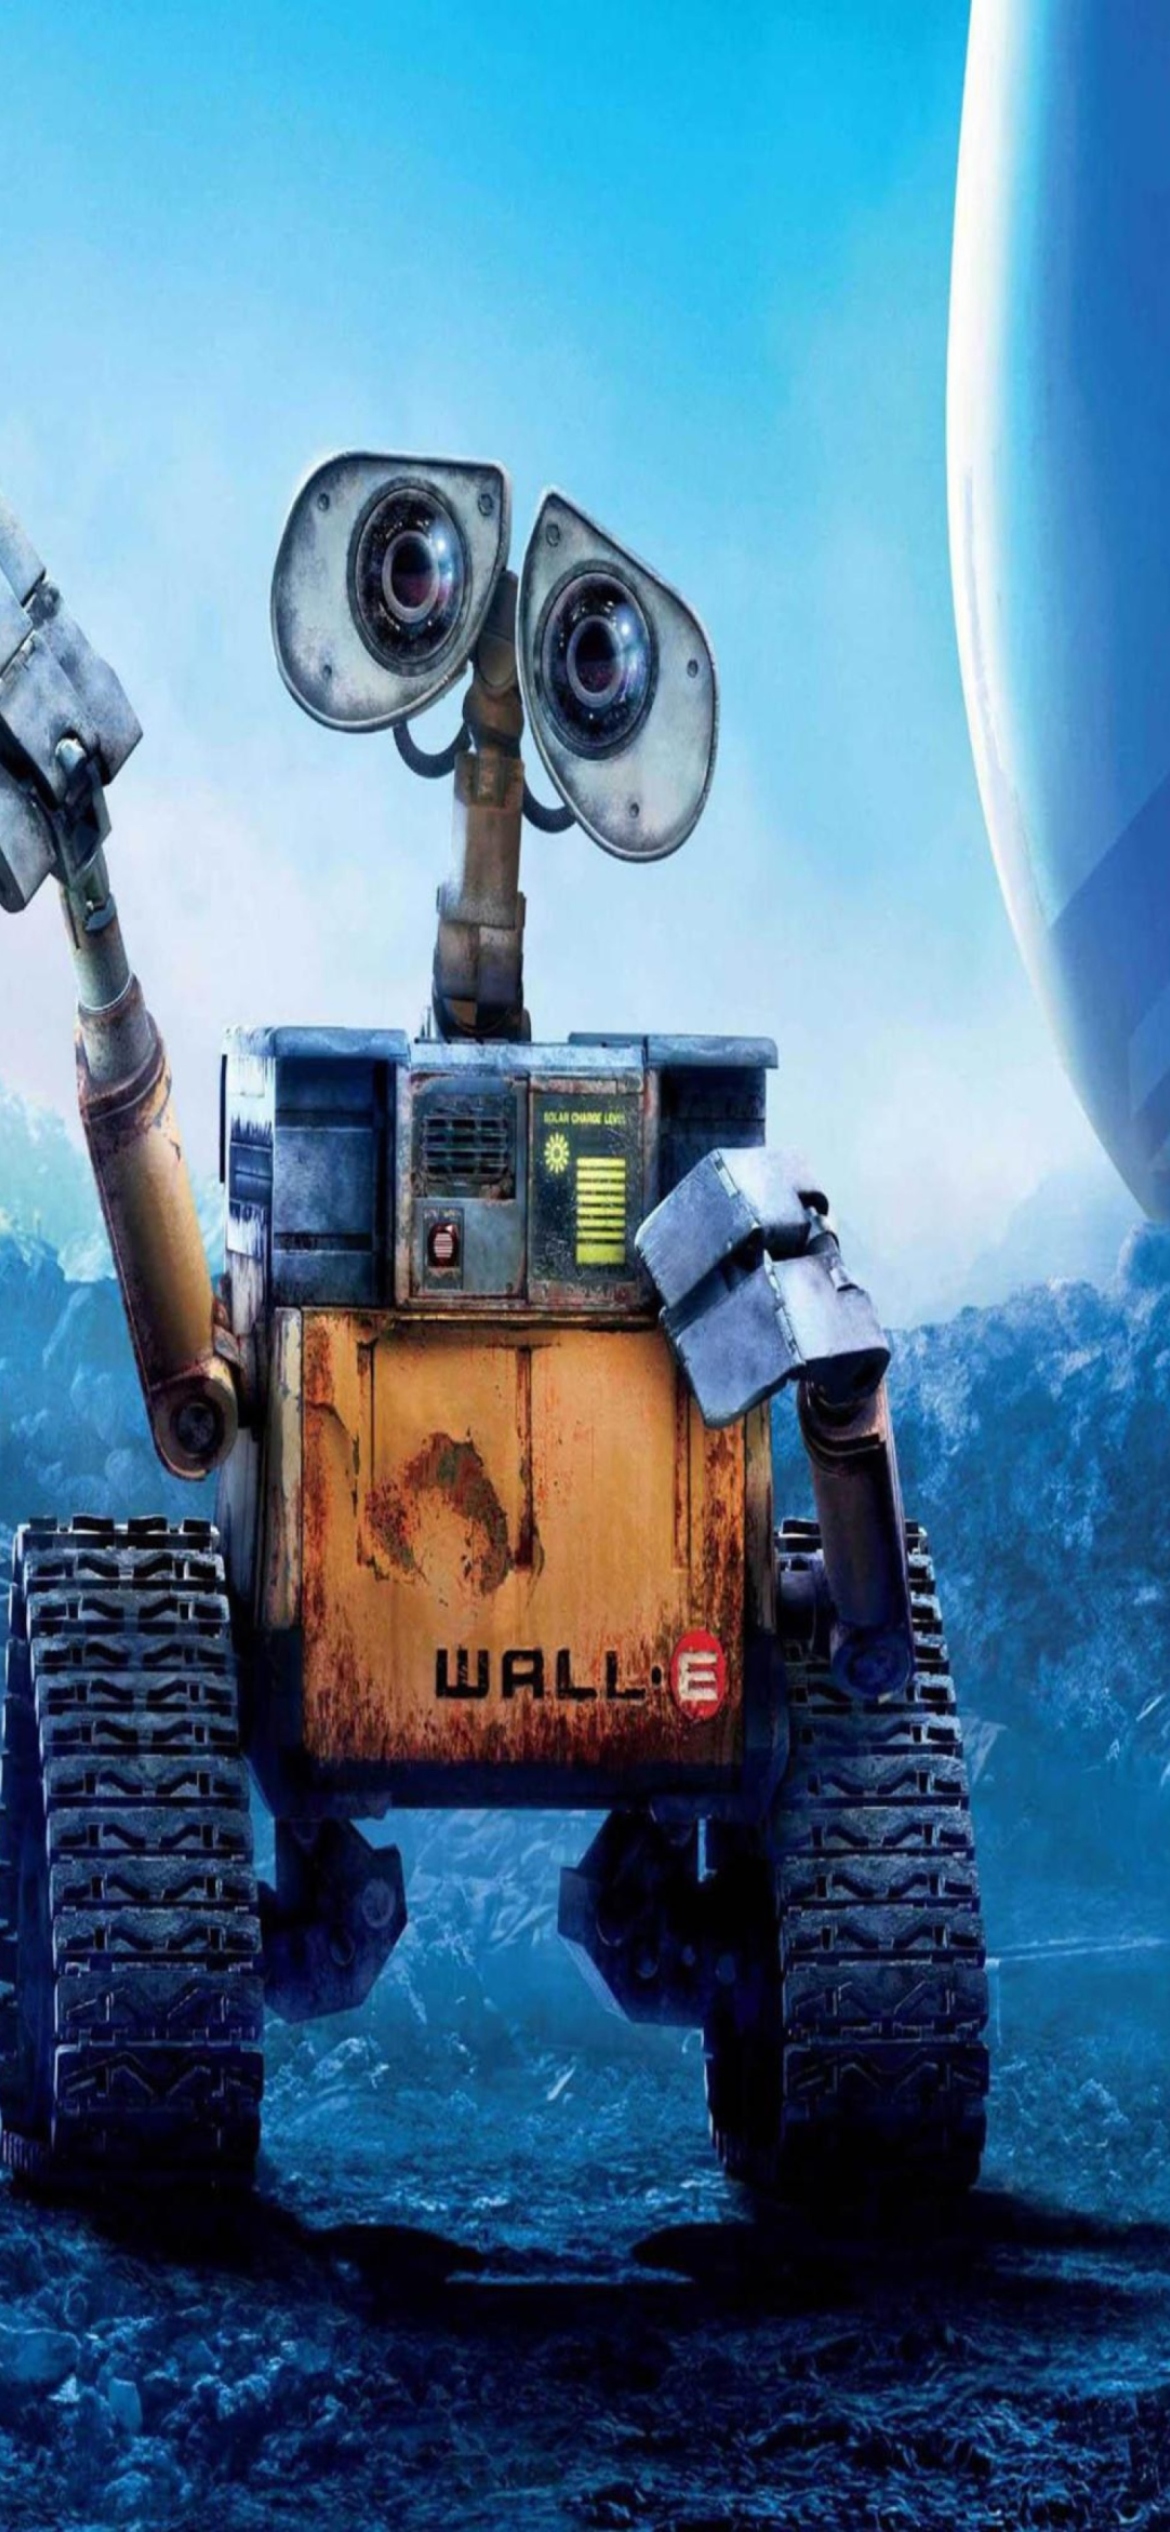 Wall-E wallpaper 1170x2532